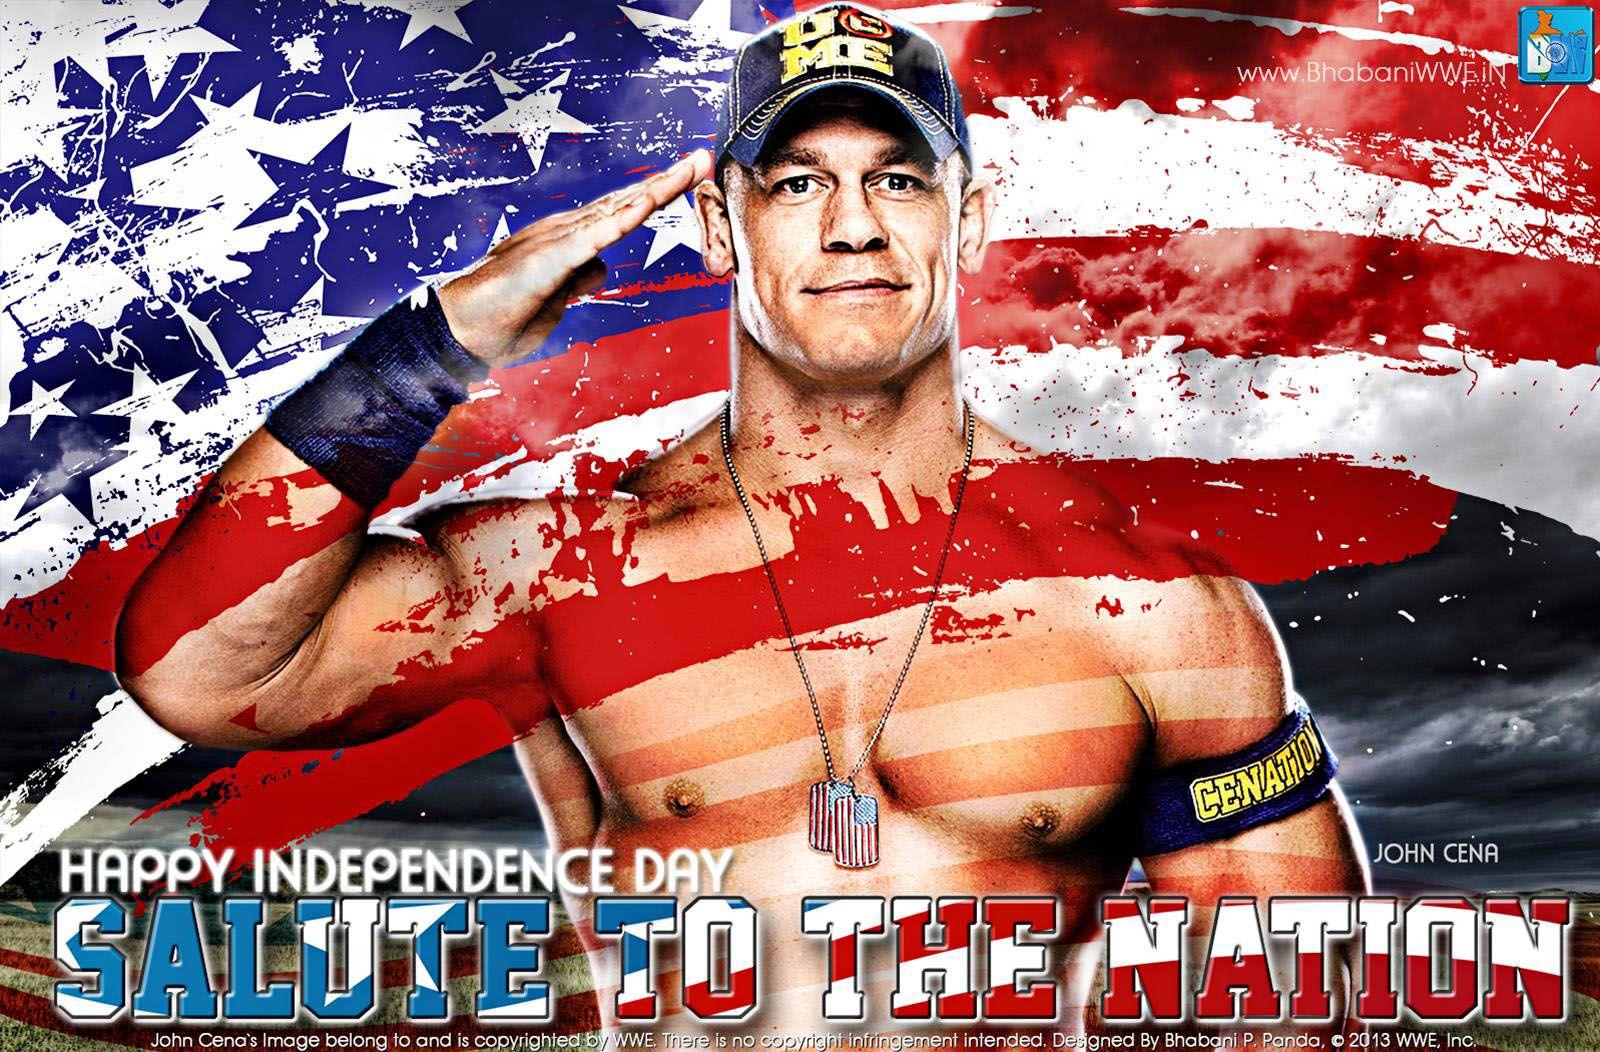 Wwe John Cena Wallpaper HD Wallpaper On Latest Image 2017 Download